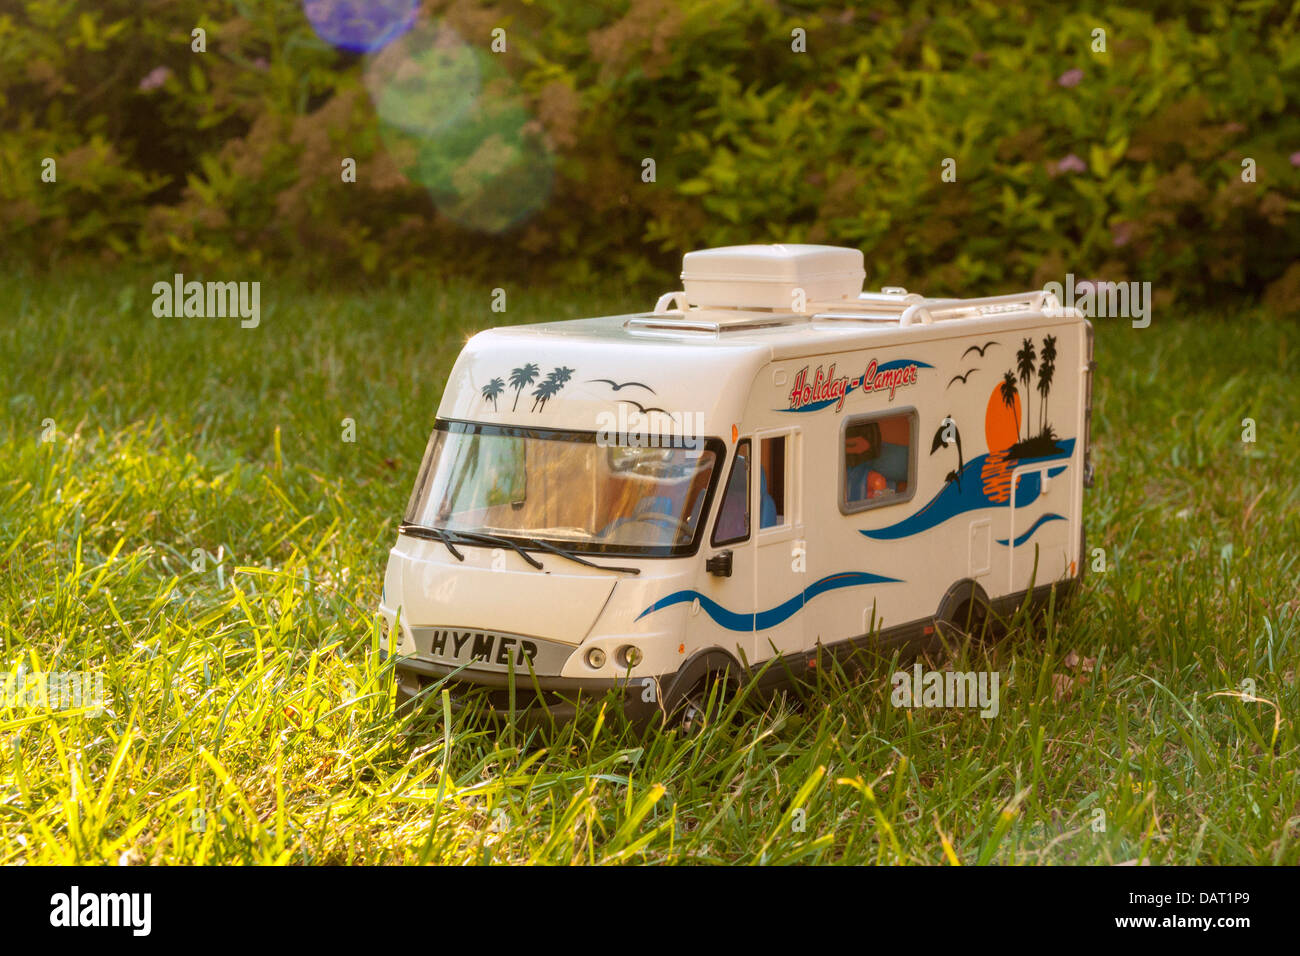 Hymer camping-jouet dans l'herbe Photo Stock - Alamy